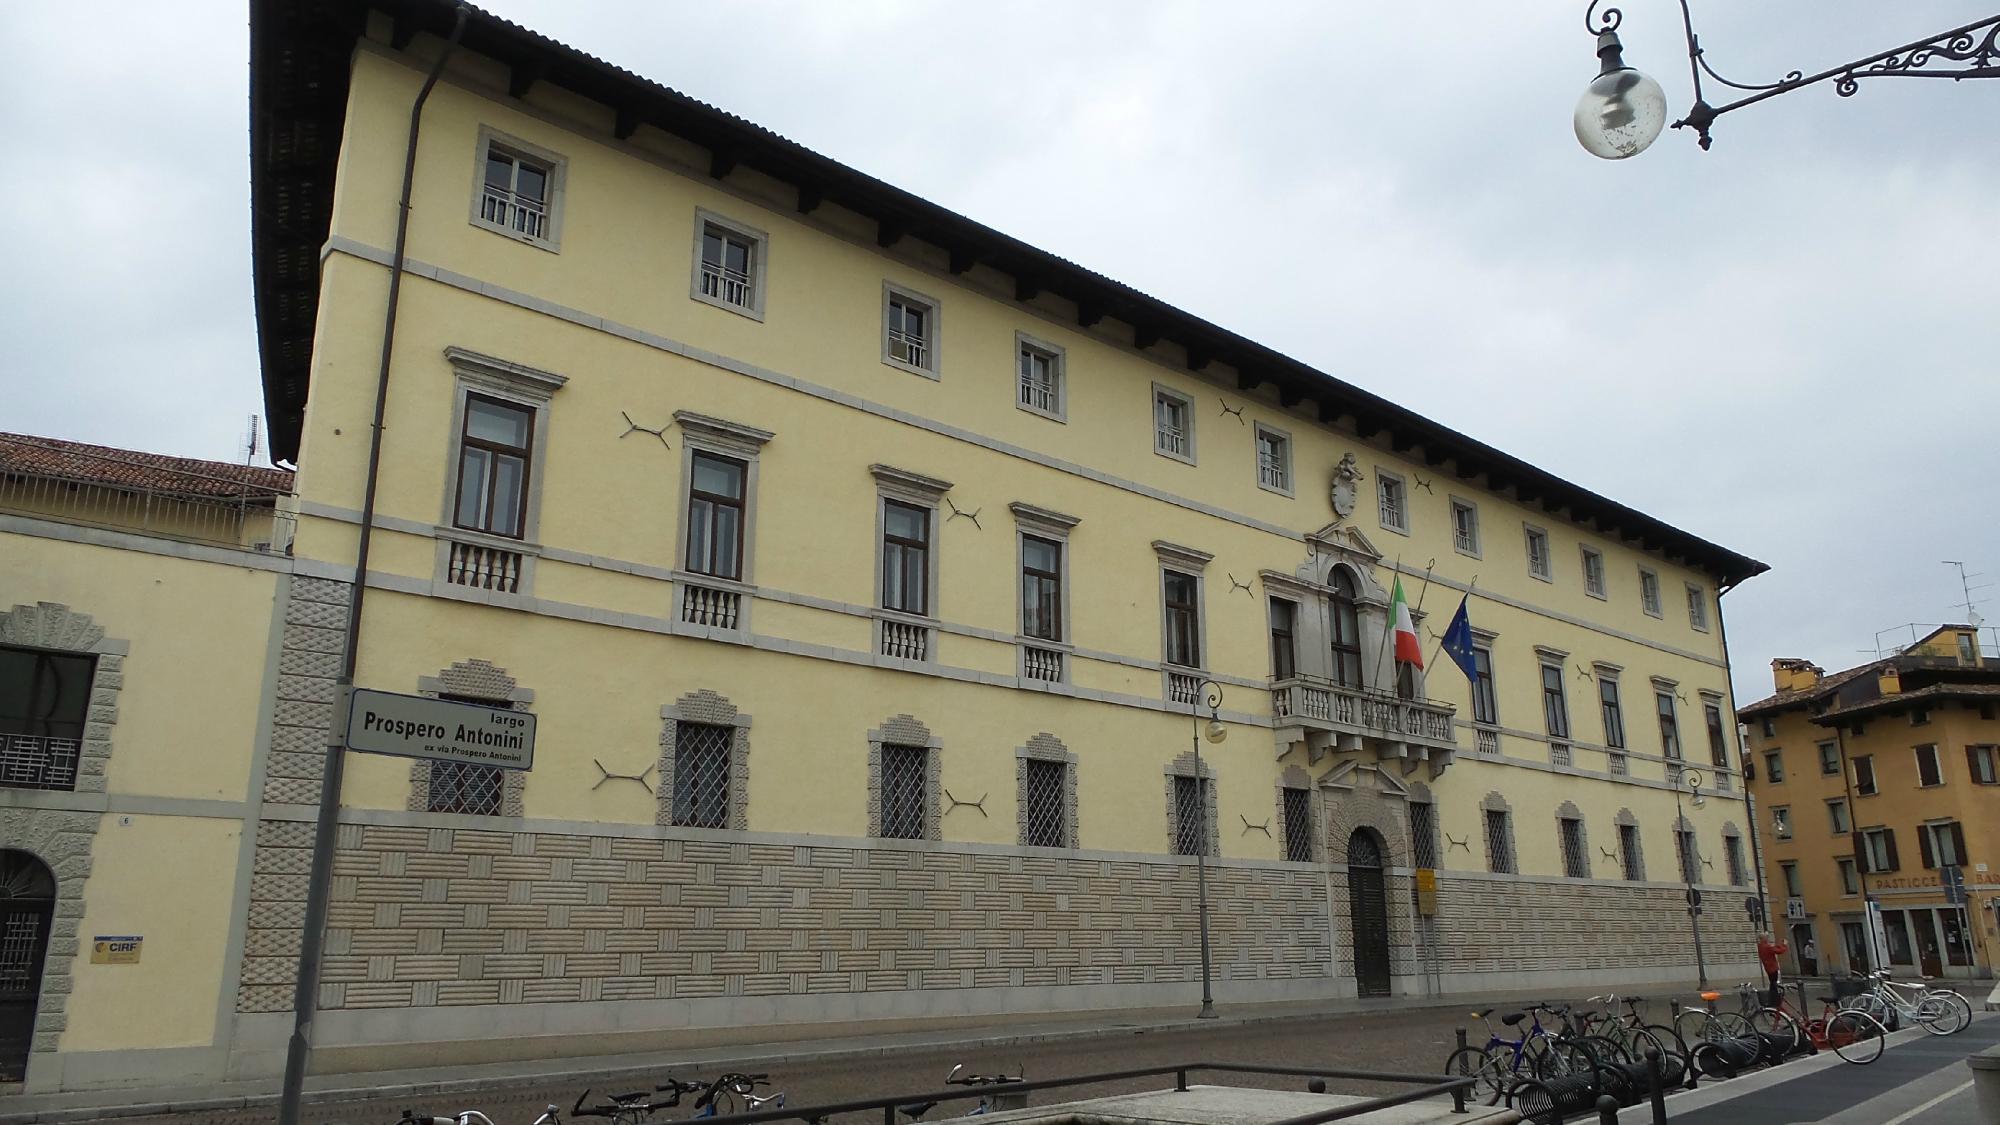 Palazzo Antonini Cernazai